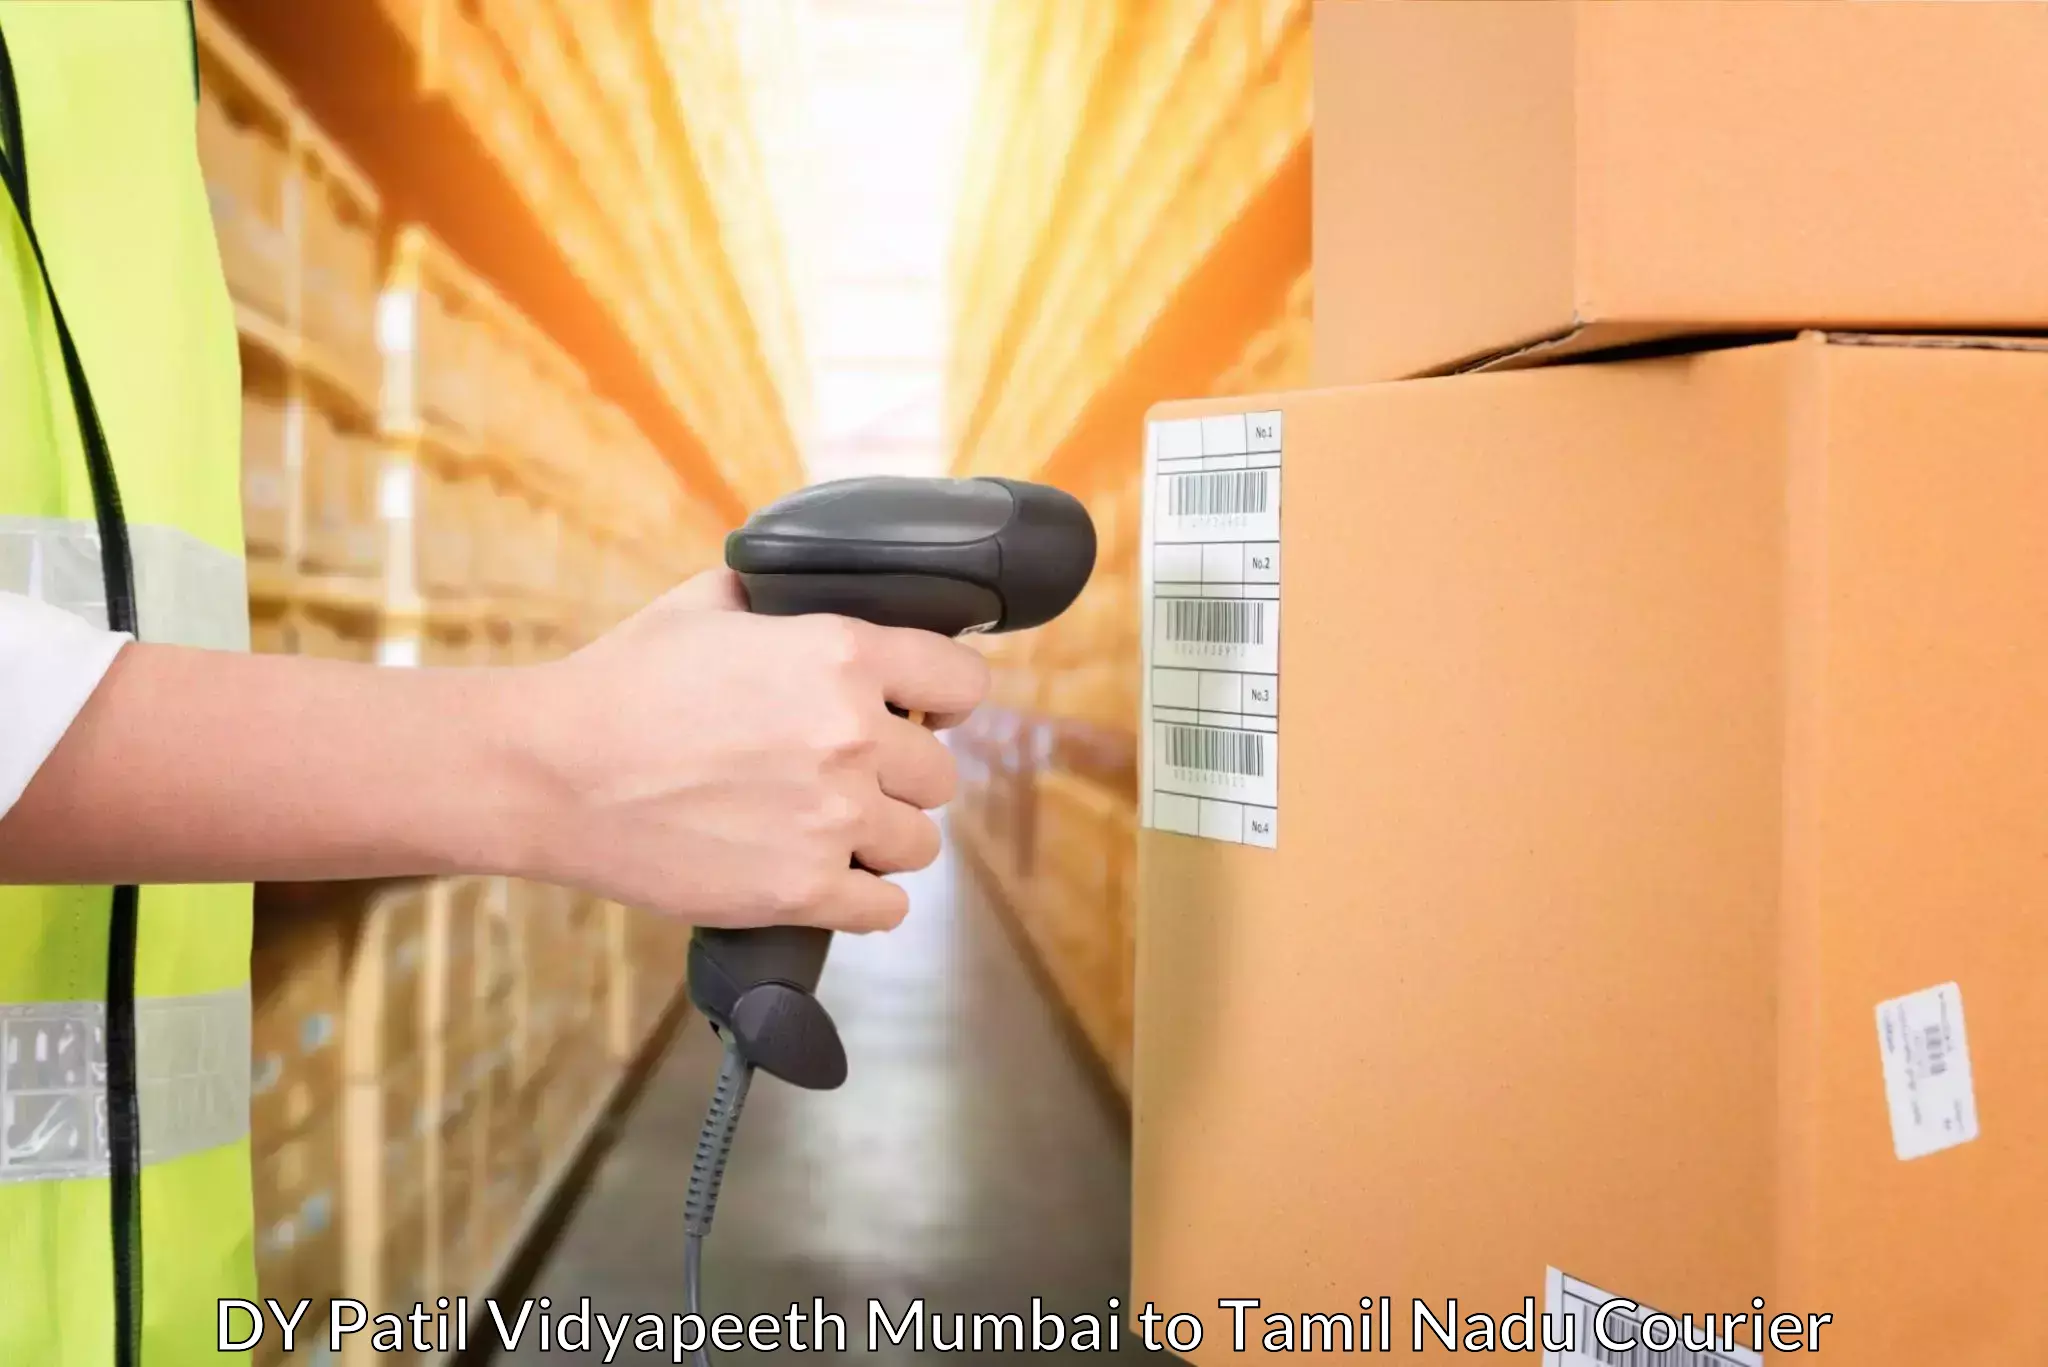 Efficient cargo services DY Patil Vidyapeeth Mumbai to Manapparai